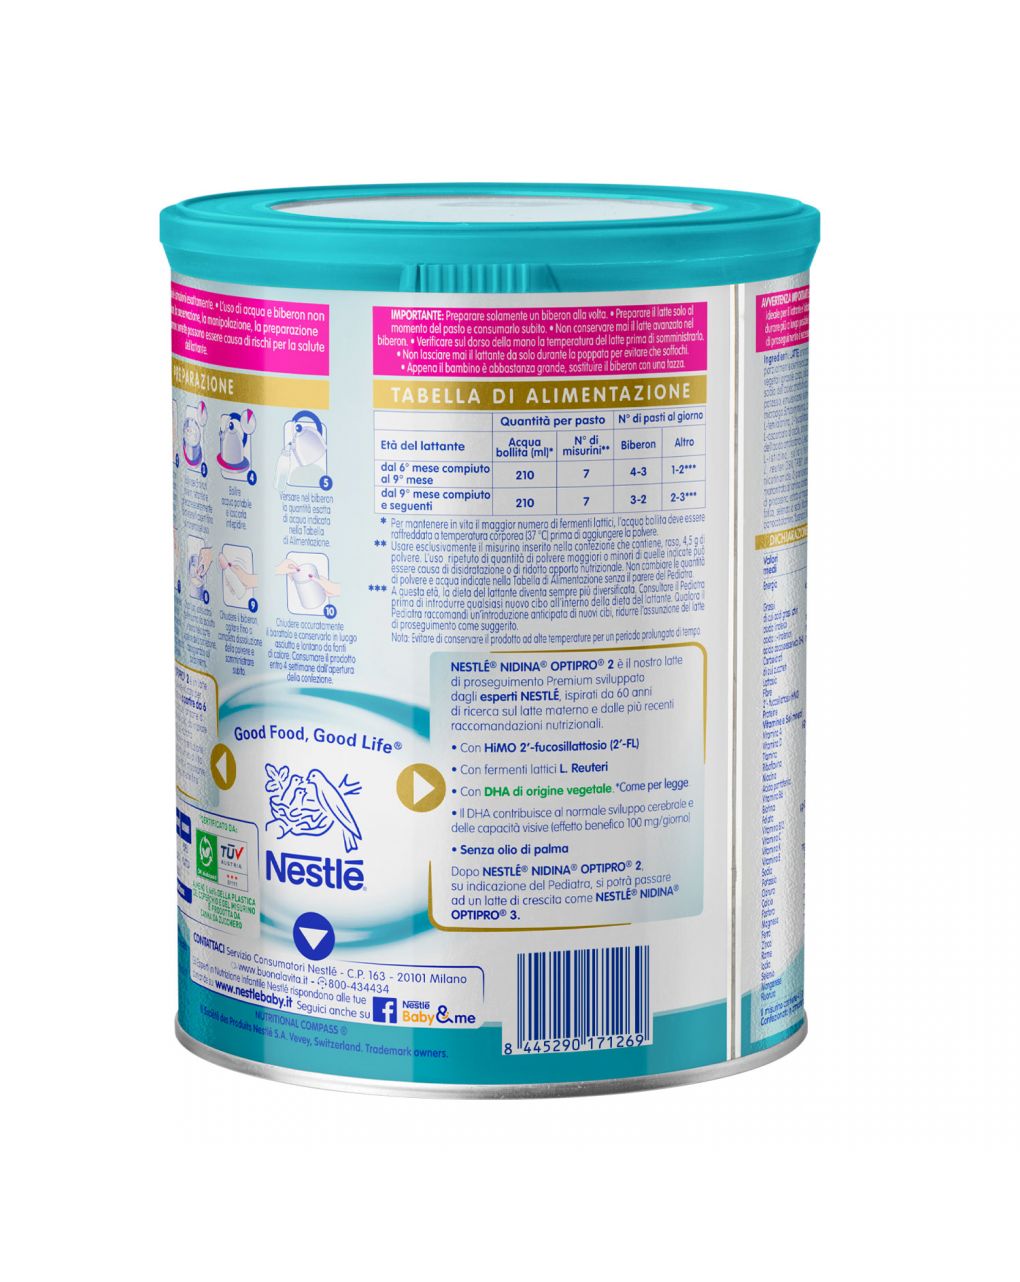 Nestlé nidina optipro 2 da 6 mesi, latte di proseguimento in polvere, latta da 800g - Nestlé